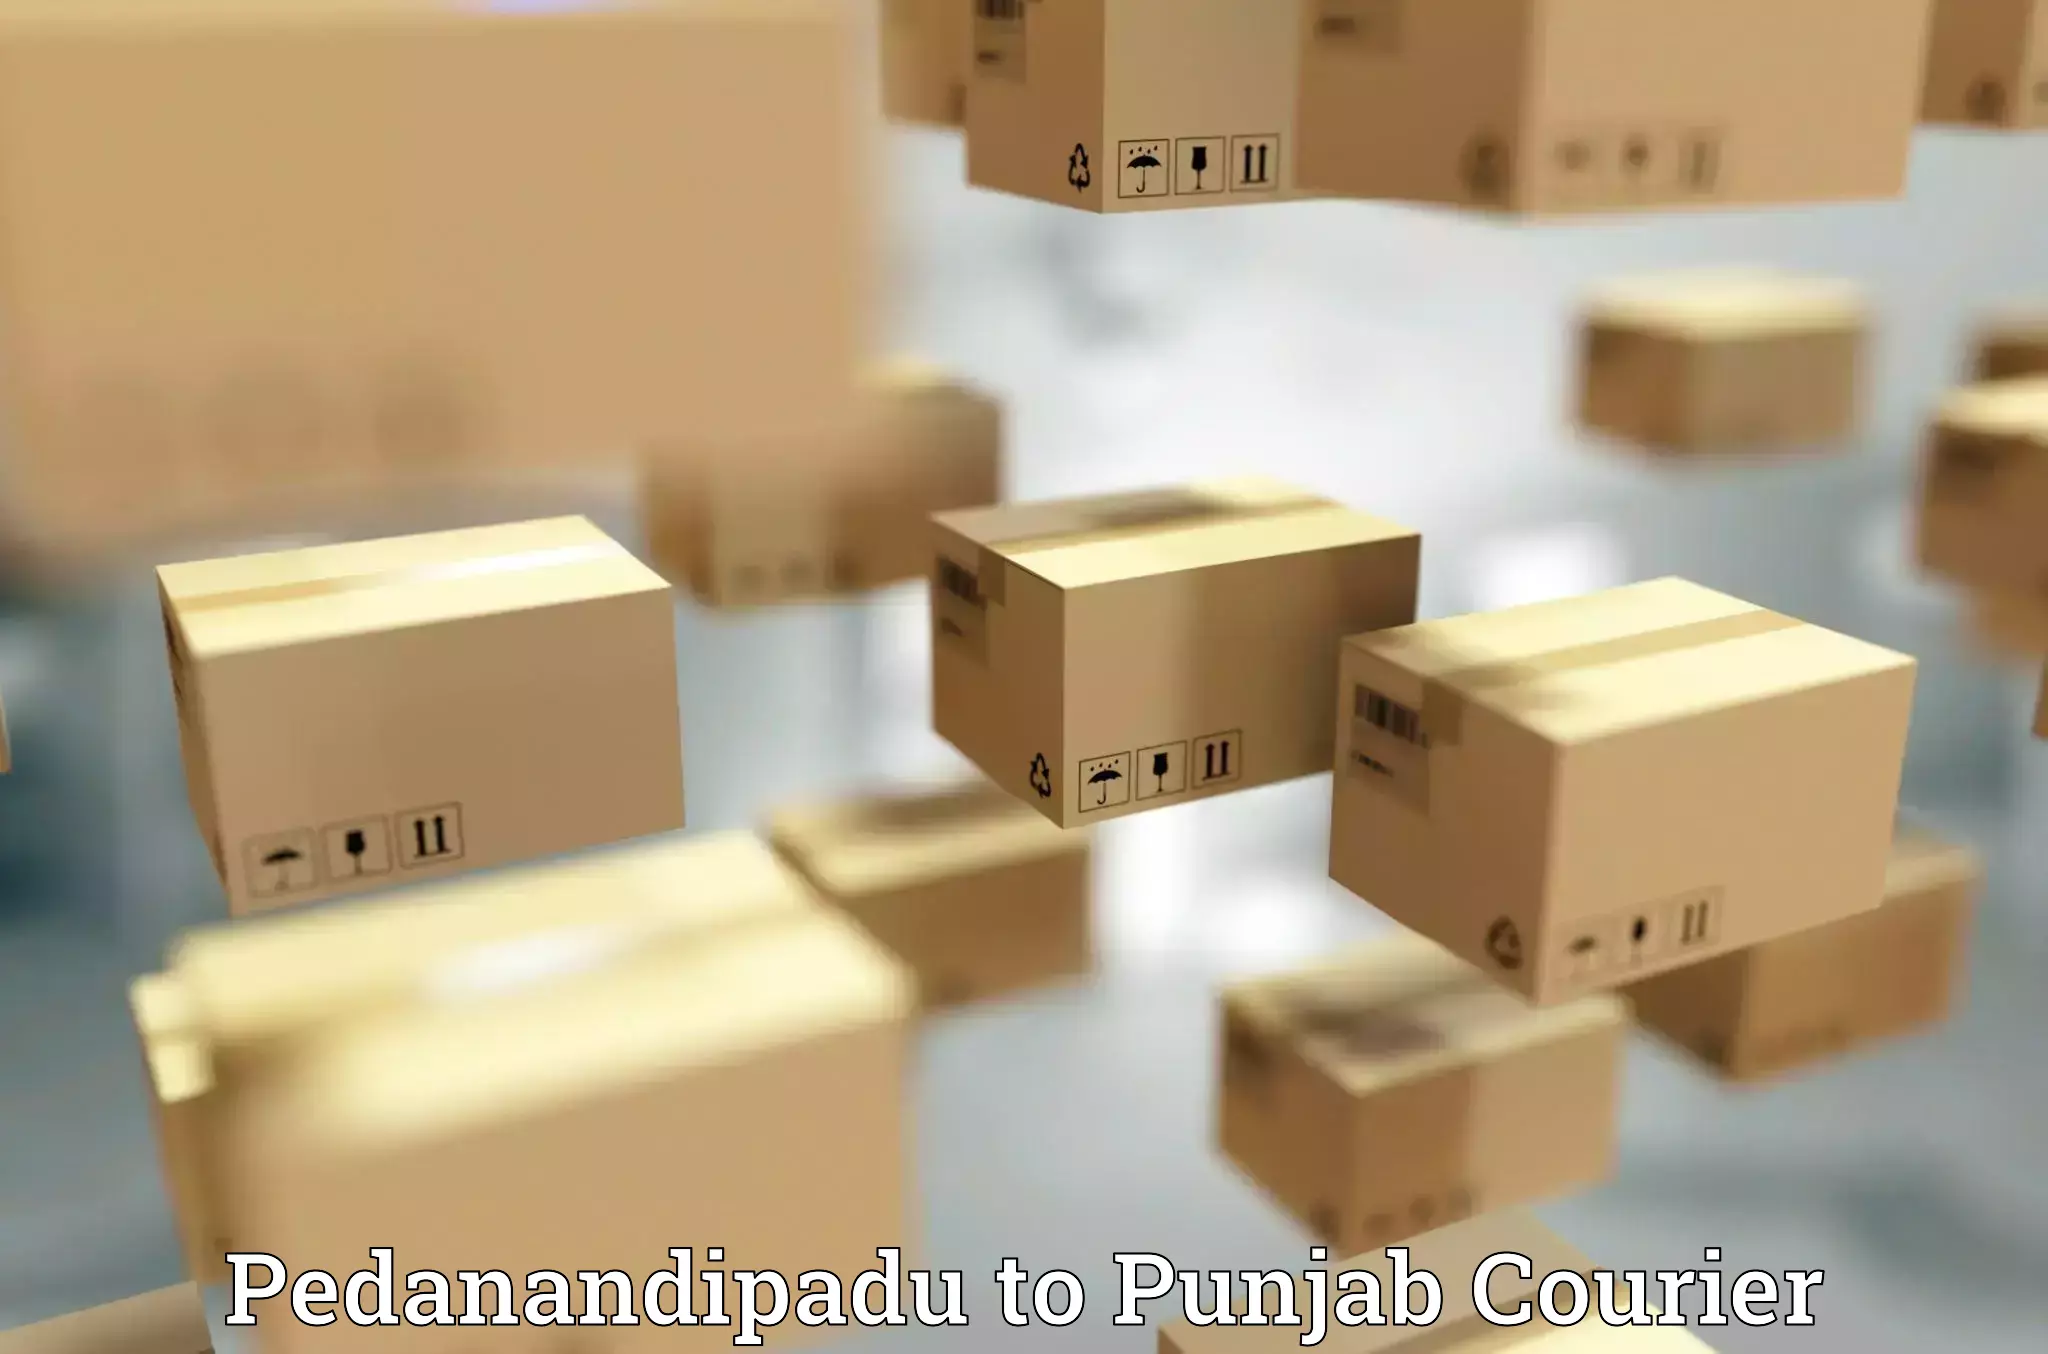 Reliable delivery network Pedanandipadu to Punjab